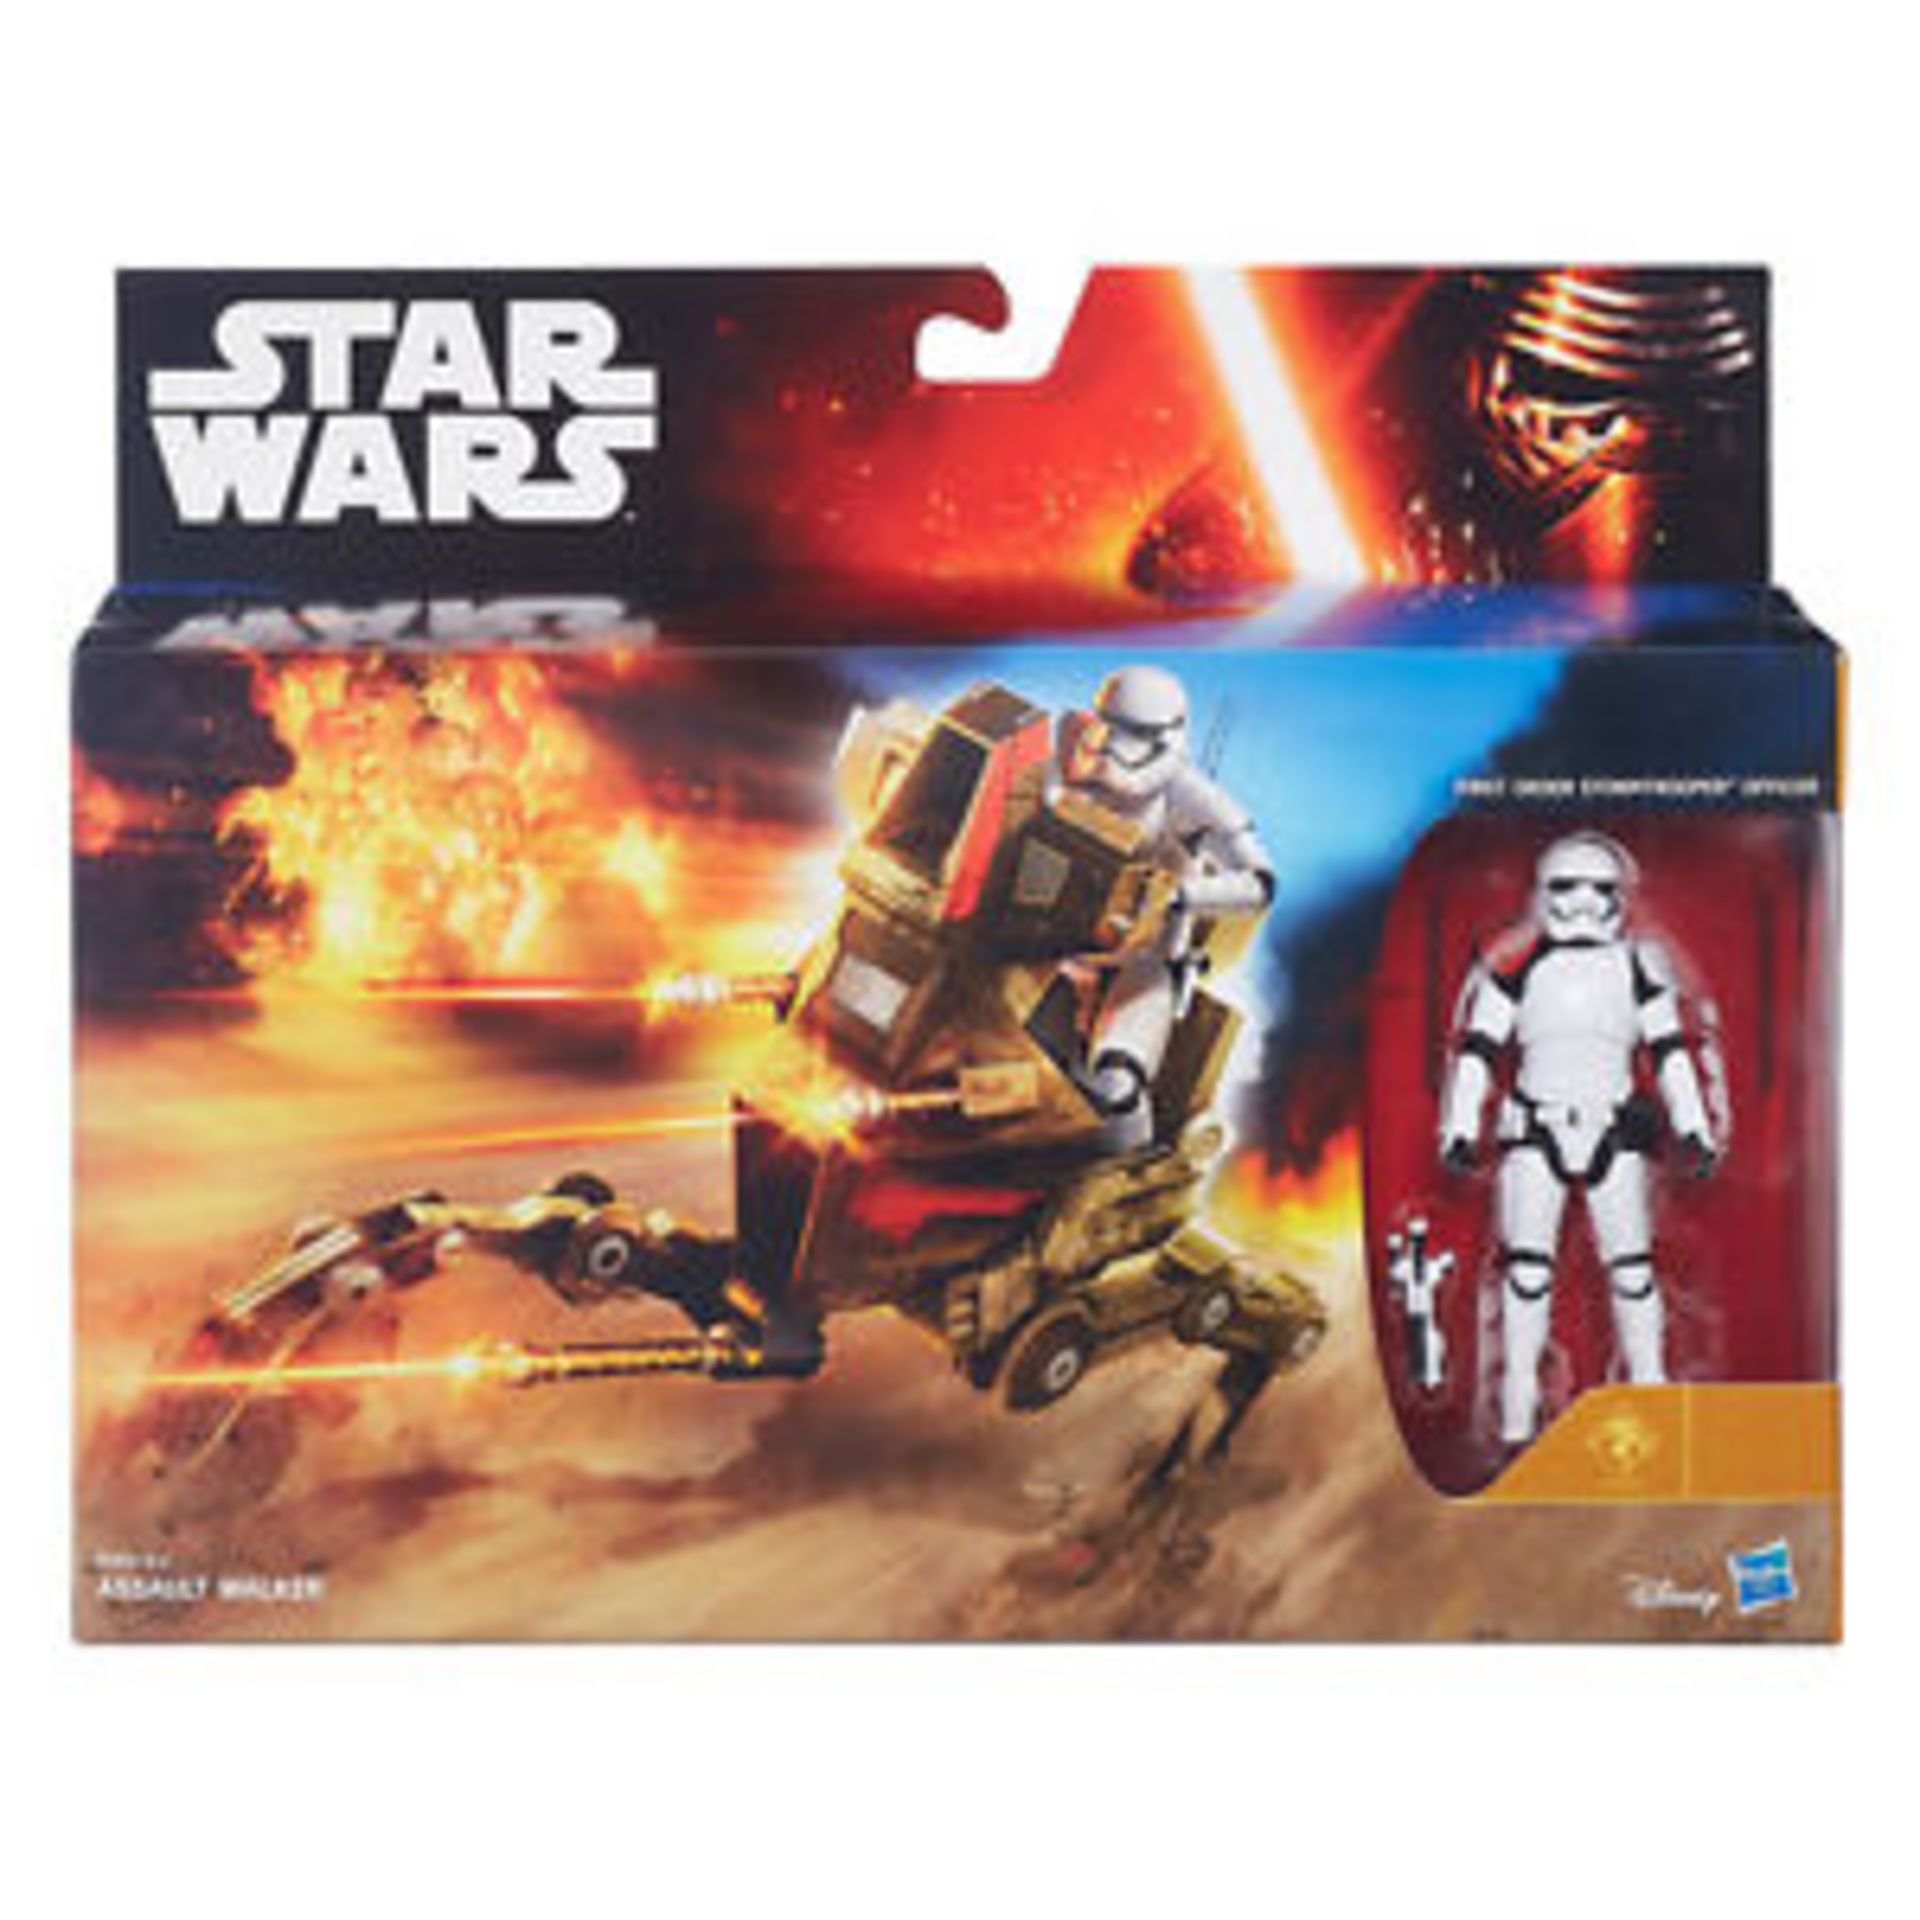 V Brand New Star Wars The Force Awakens Desert Assault Walker - Online Price £32.99 (My Geek Box) - Image 2 of 2